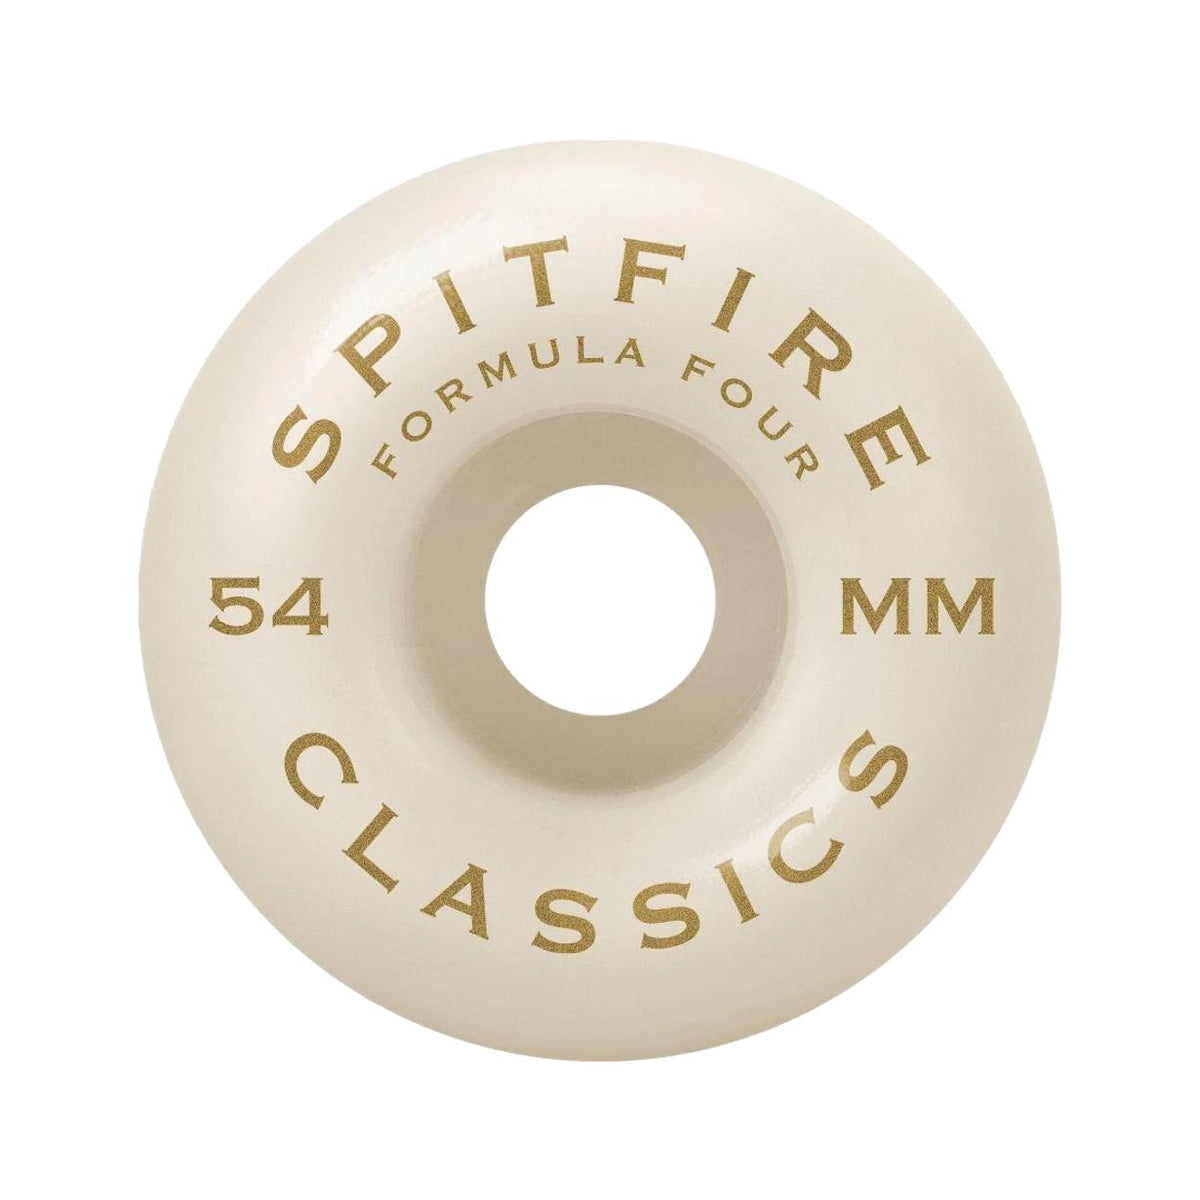 Spitfire F4 101 Classic Swirl 54mm - Venue Skateboards